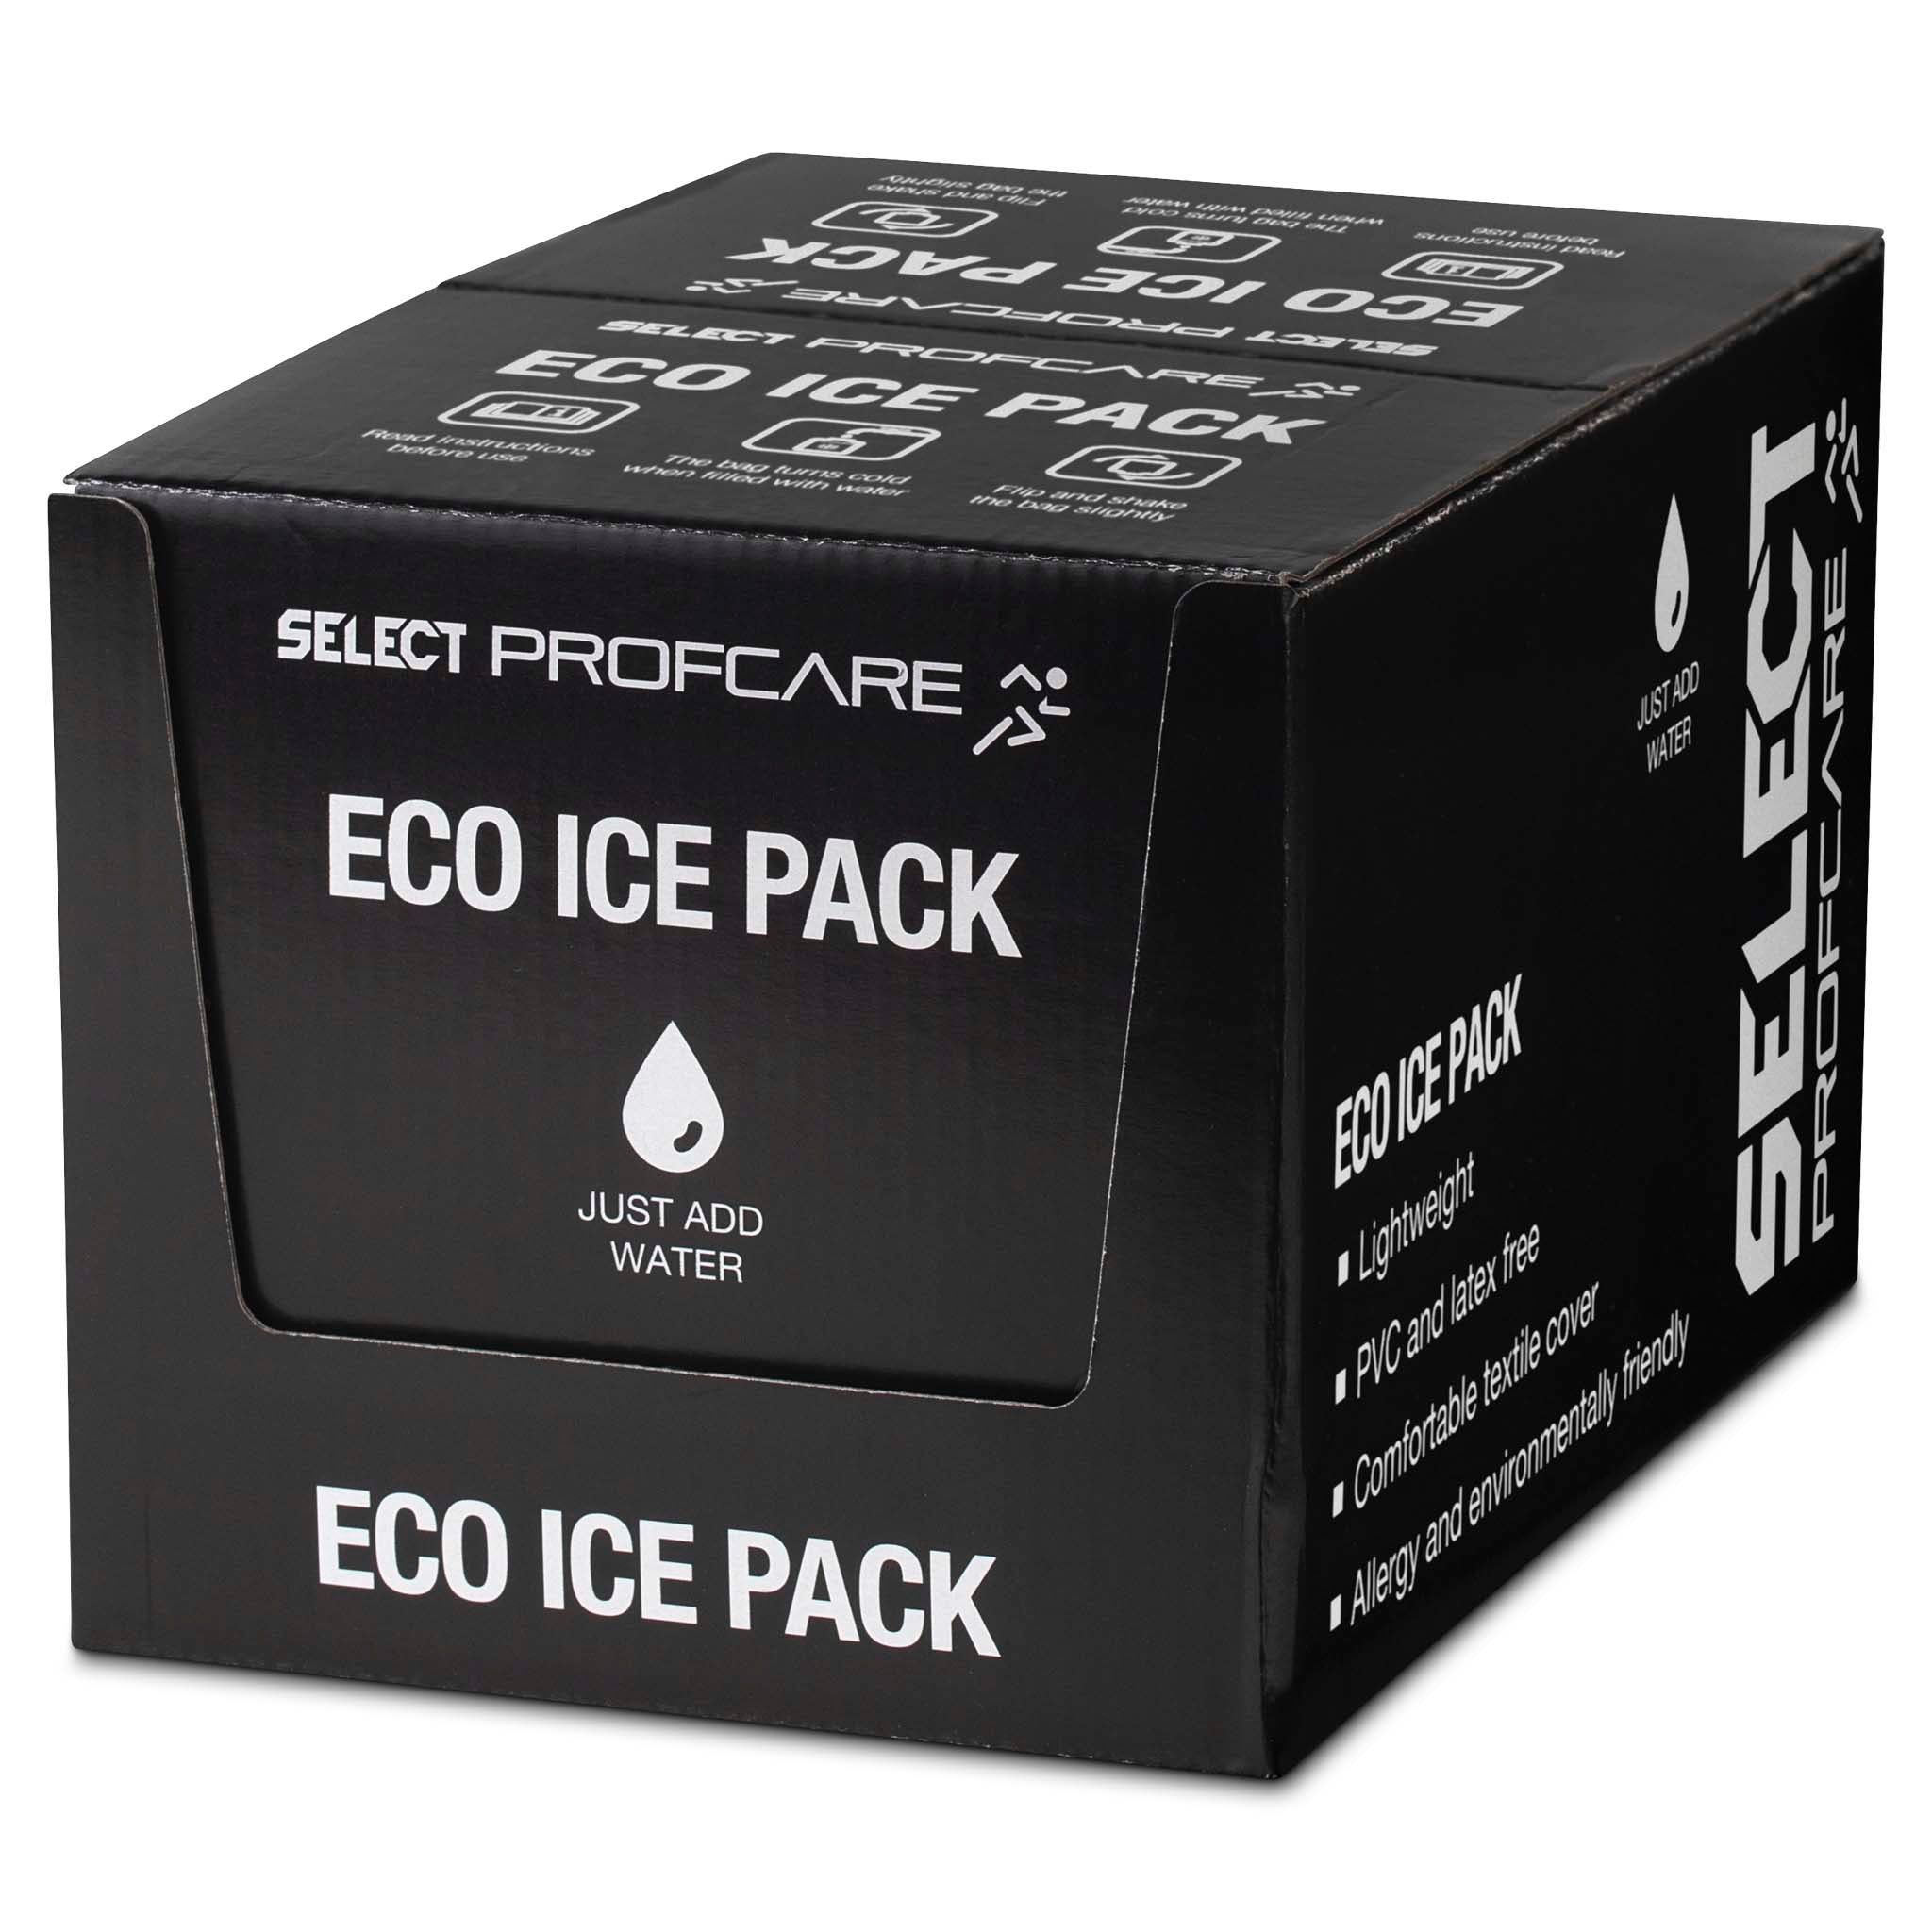 Eco Ice pack